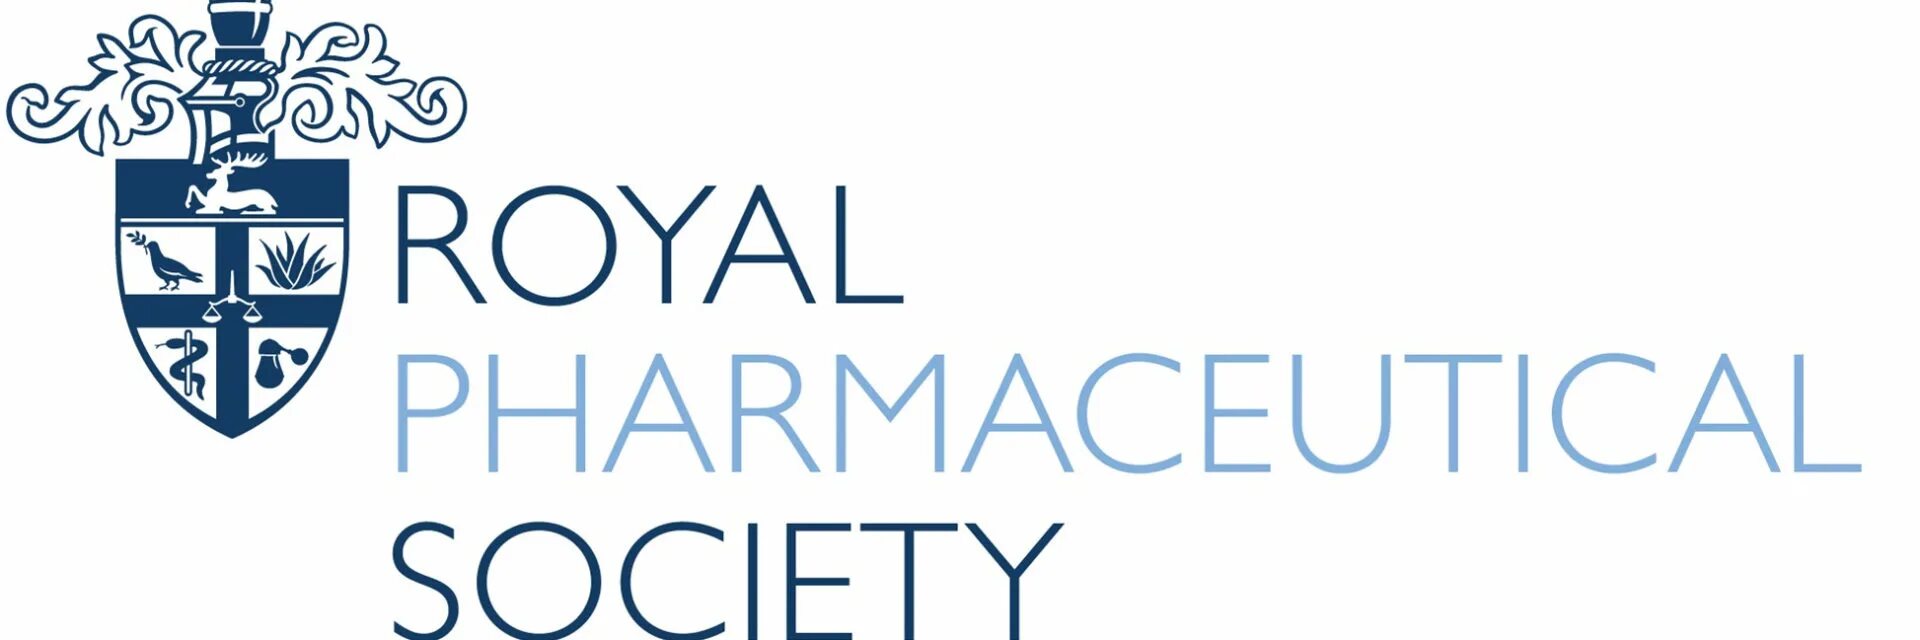 Society text. Royal Pharmaceutical Society of great Britain. Герб королевского фармацевтического общества. Королевское общество (Royal Society). Оксфорд логотип.